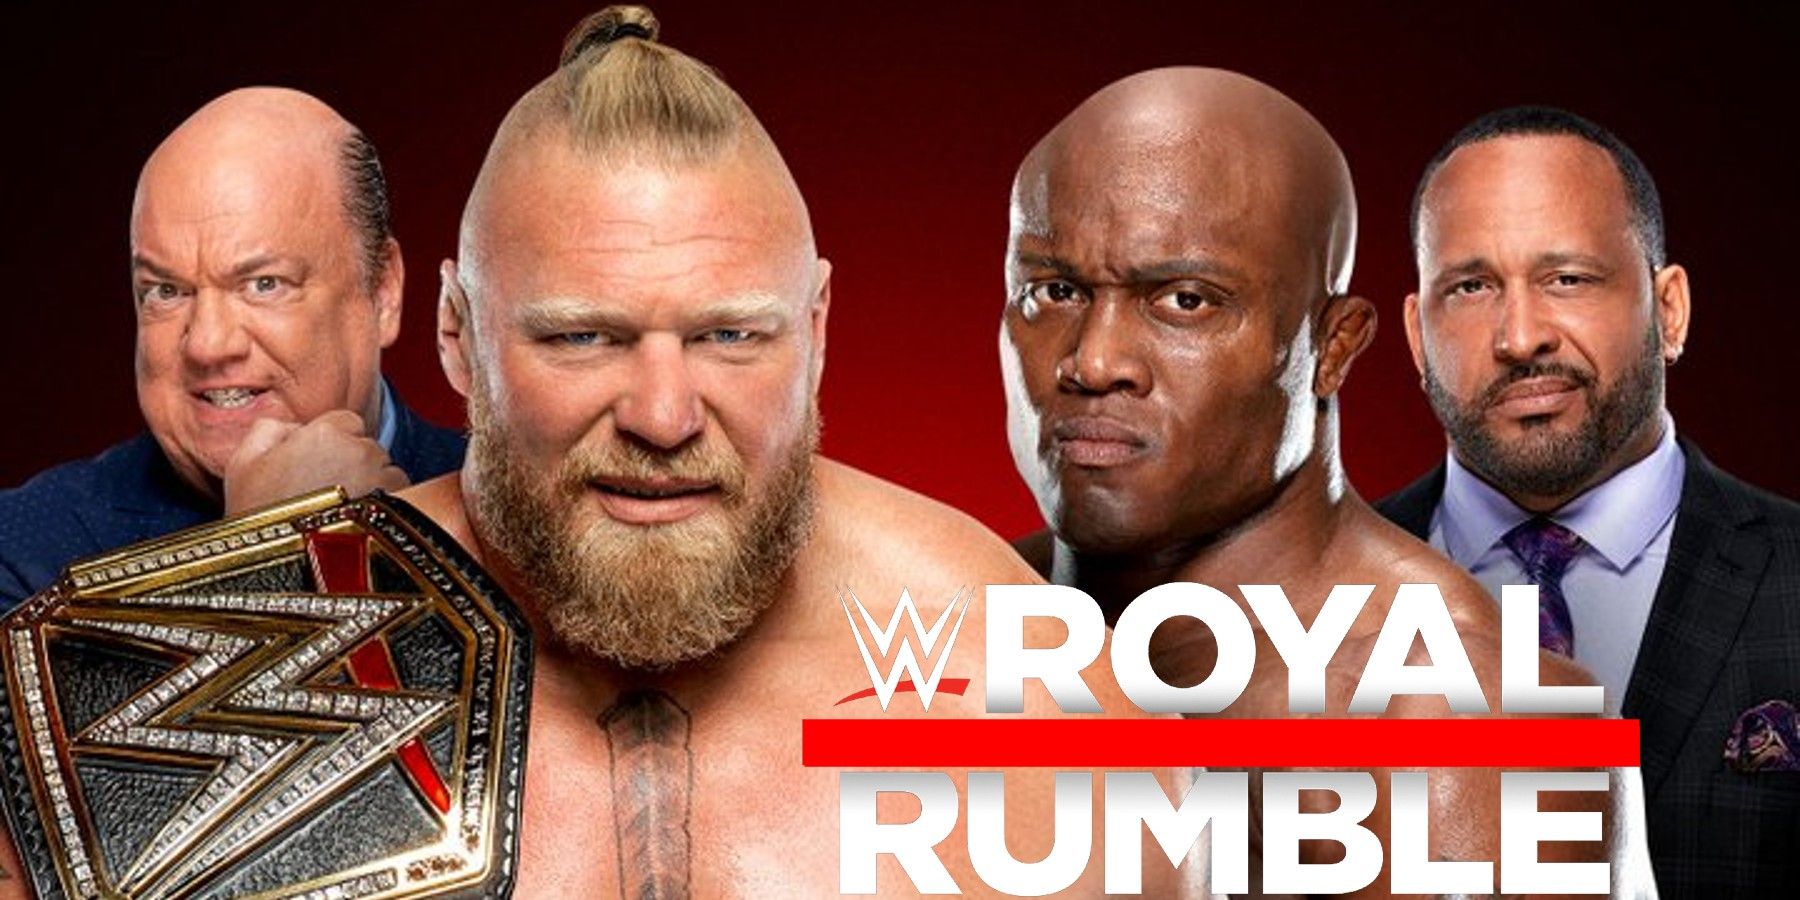 WWE Royal Rumble 2022 Main Event is Brock Lesnar vs. Bobby Lashley